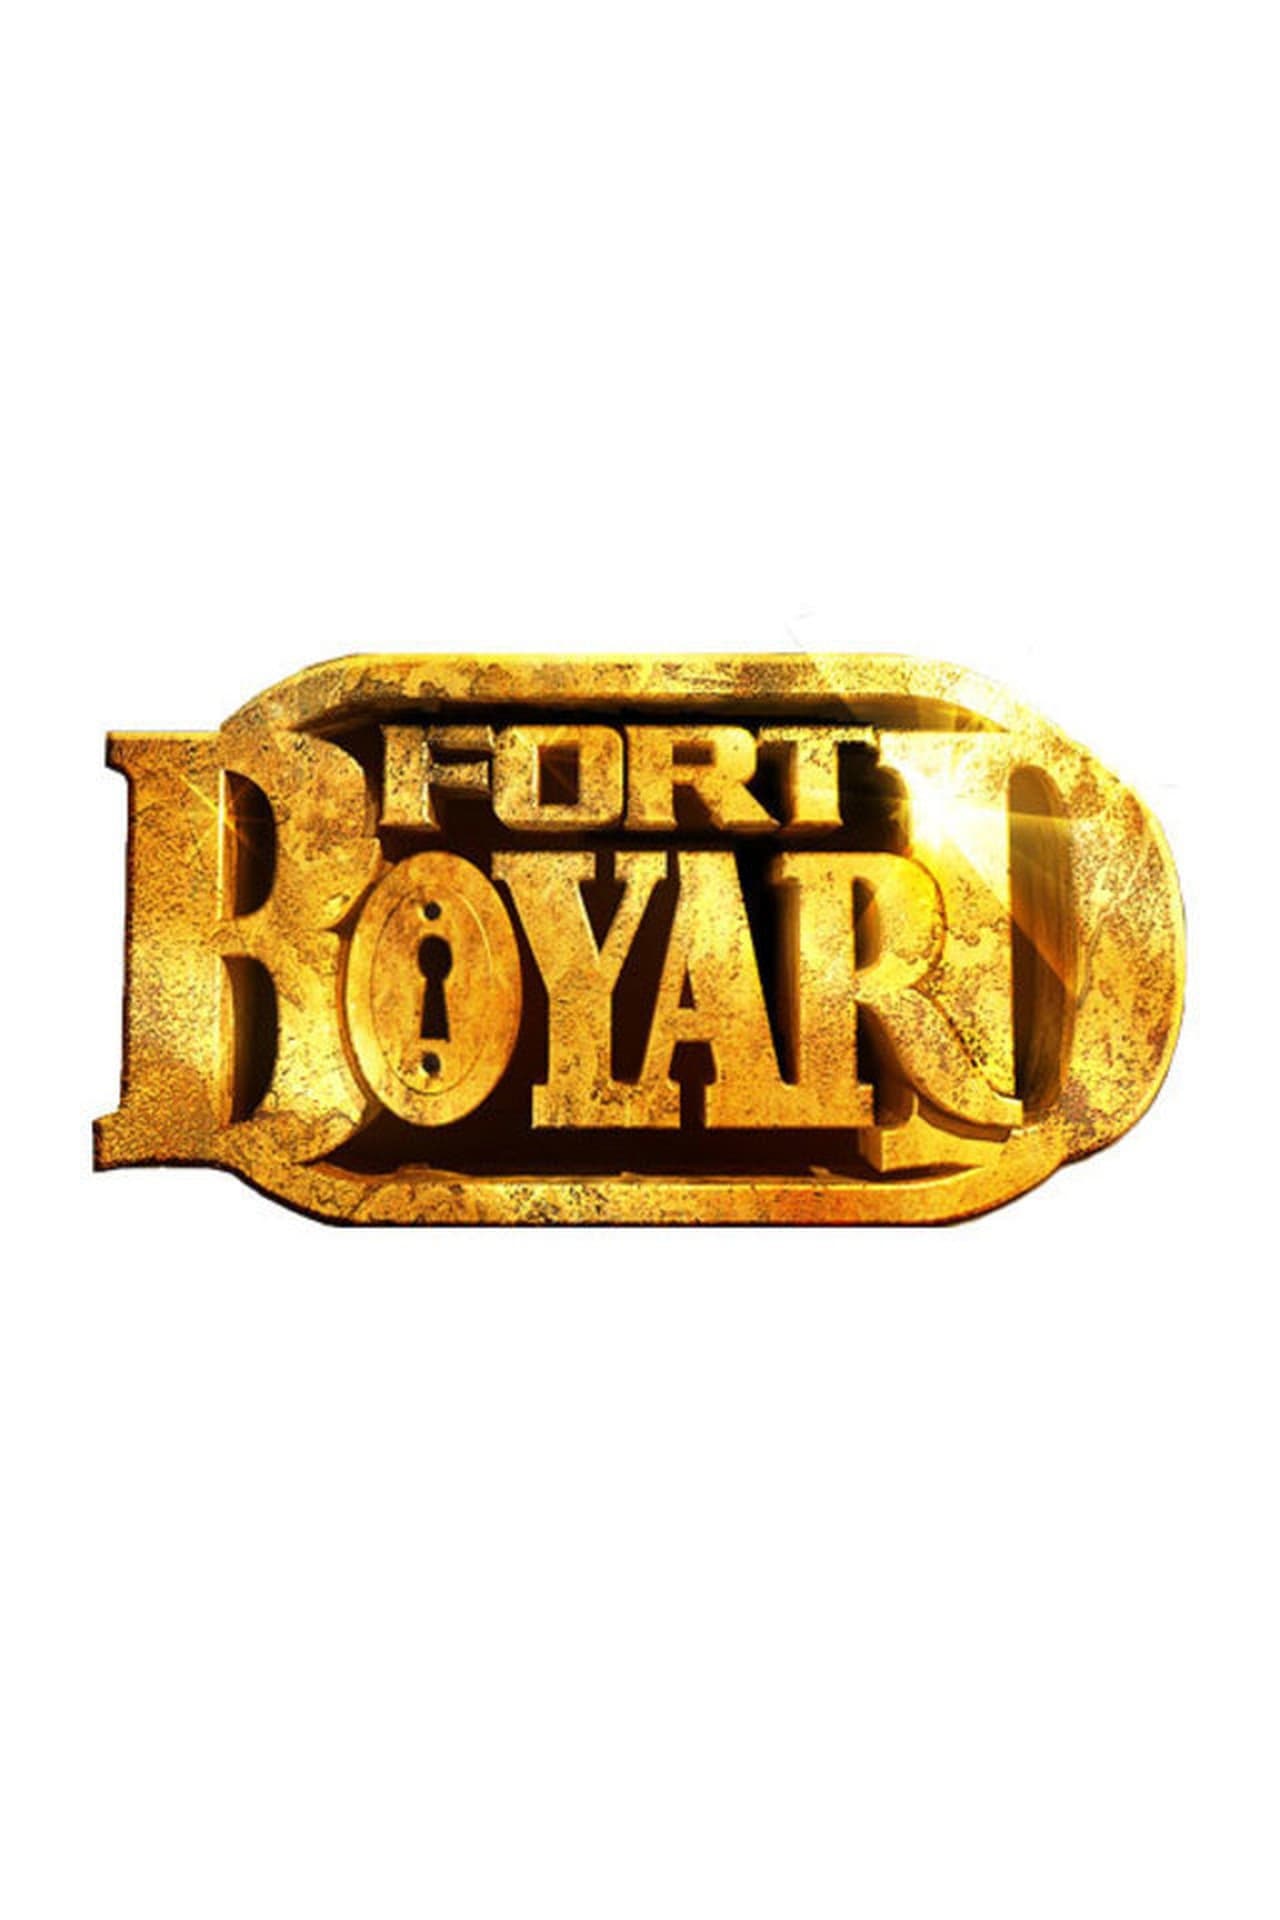 Fort Boyard (1995)